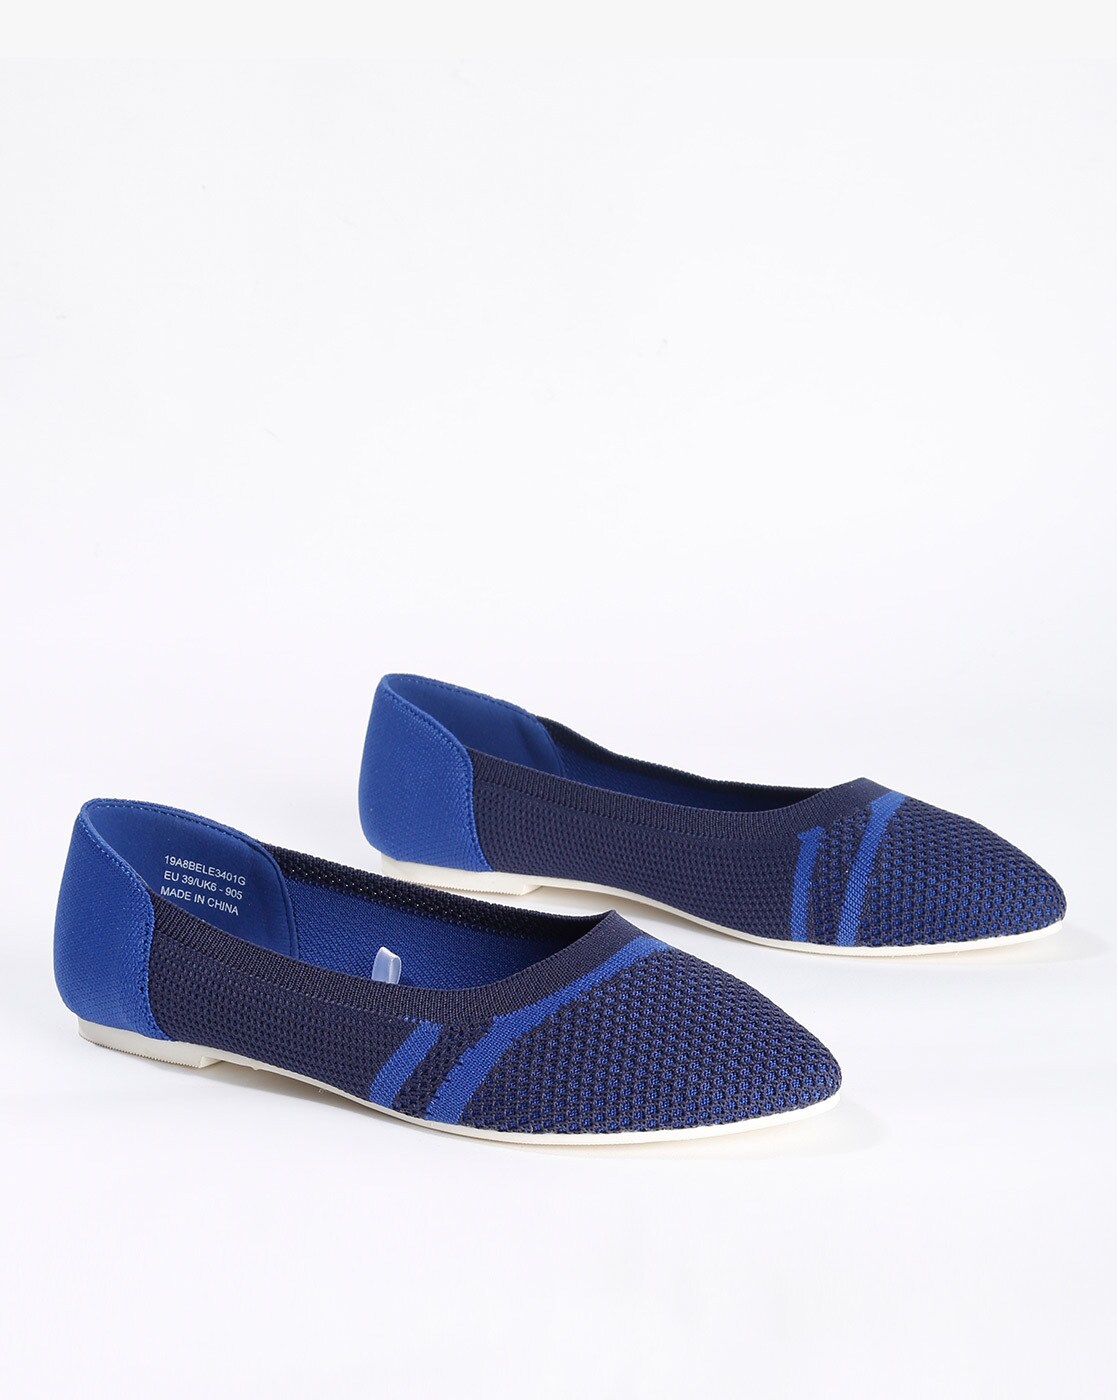 navy blue flat shoes